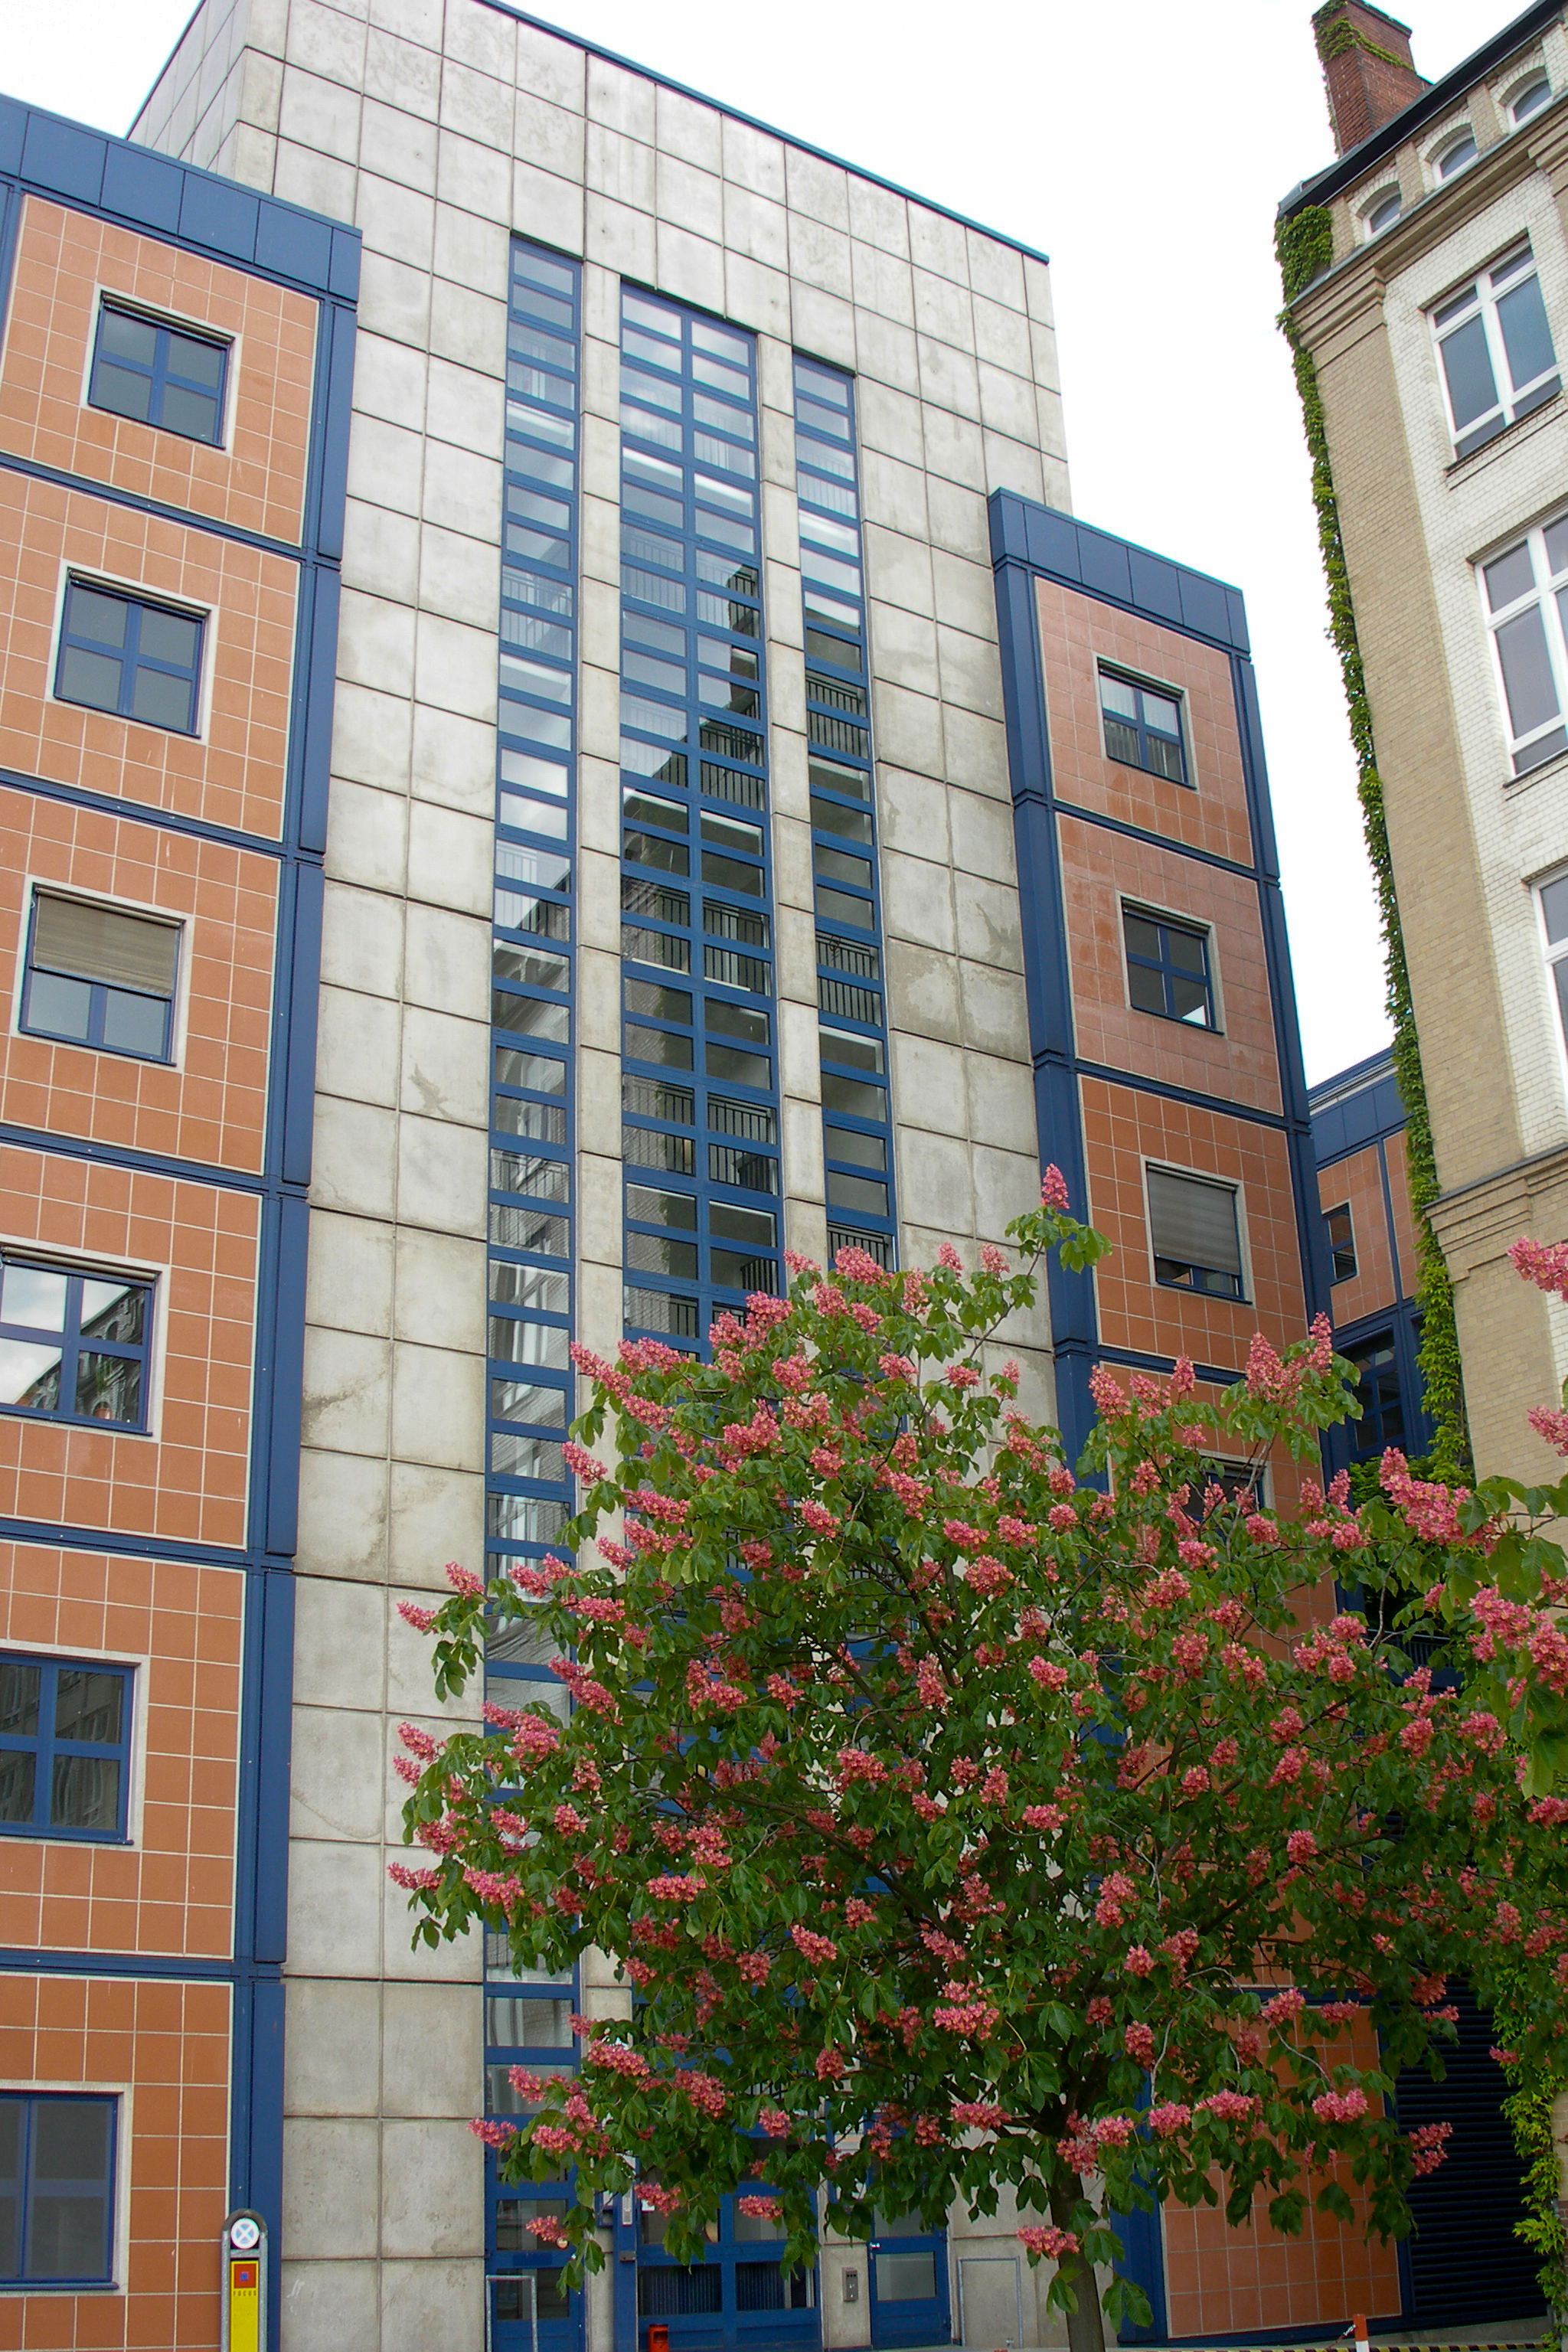 Buildings in Berlin